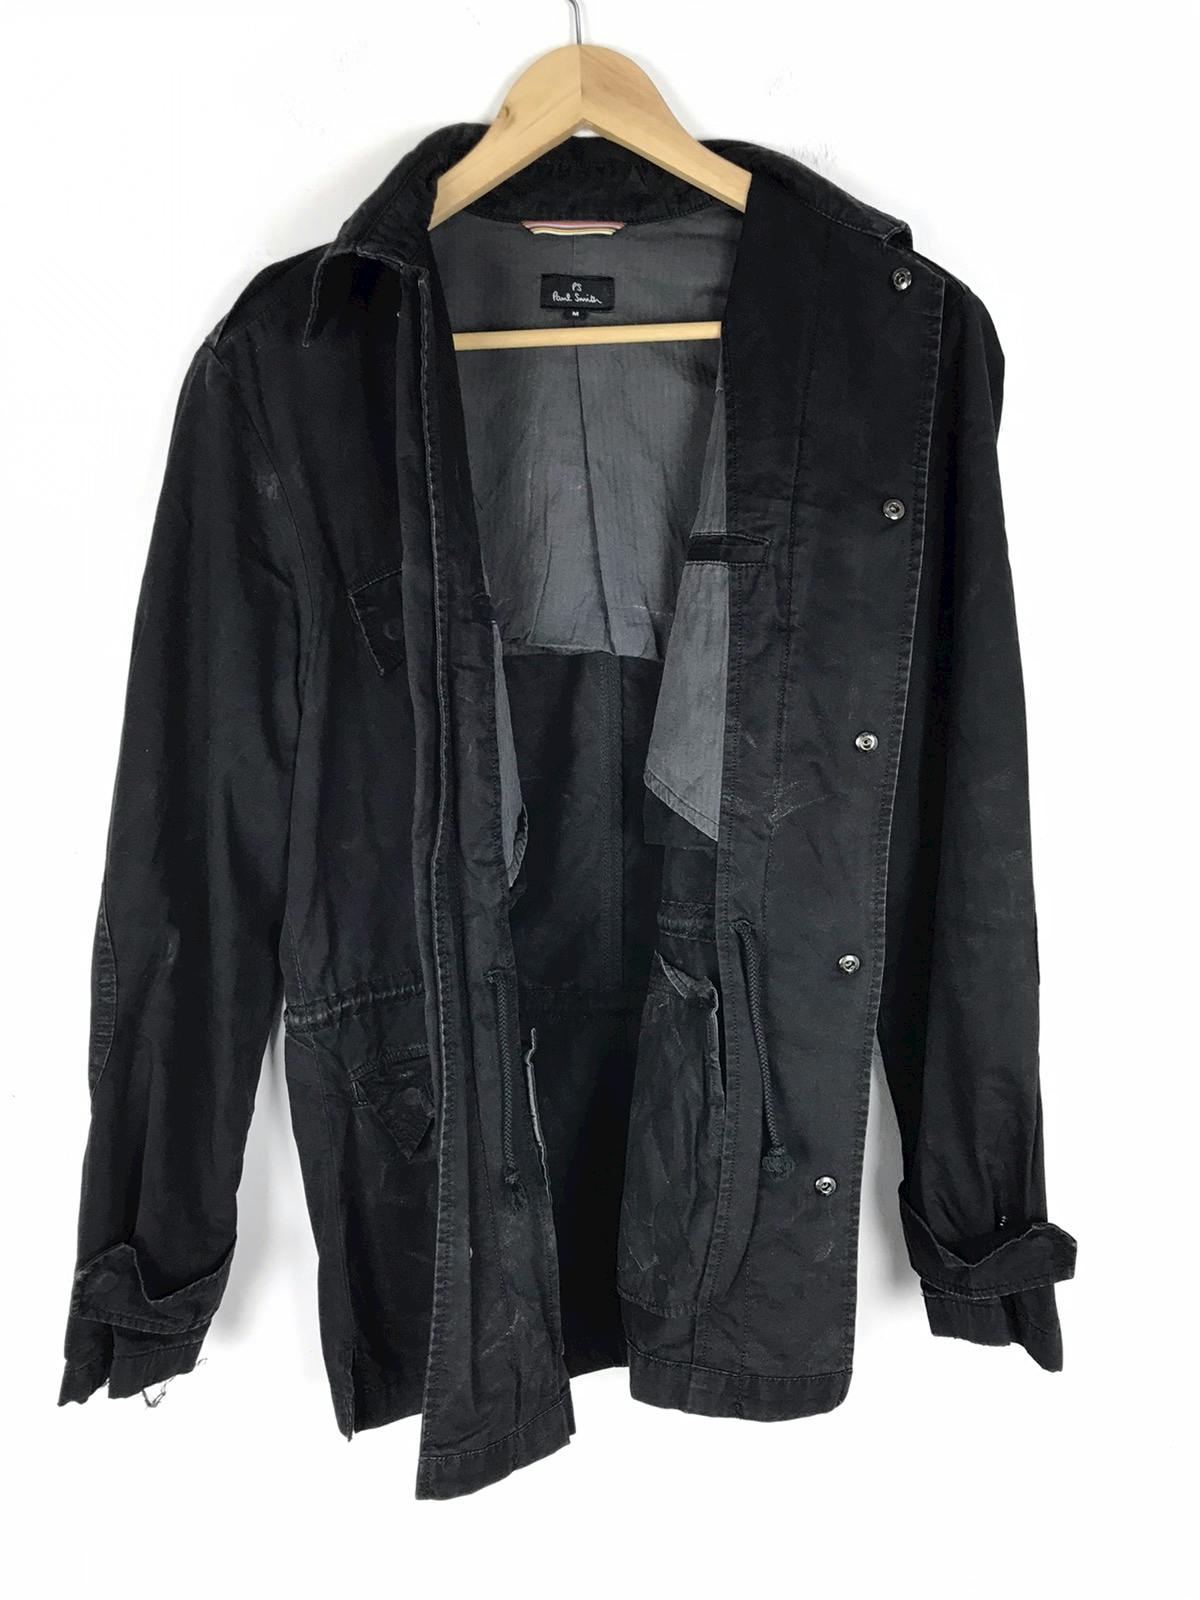 Vintage Paul Smith Overcoat Dark Jacket - 7